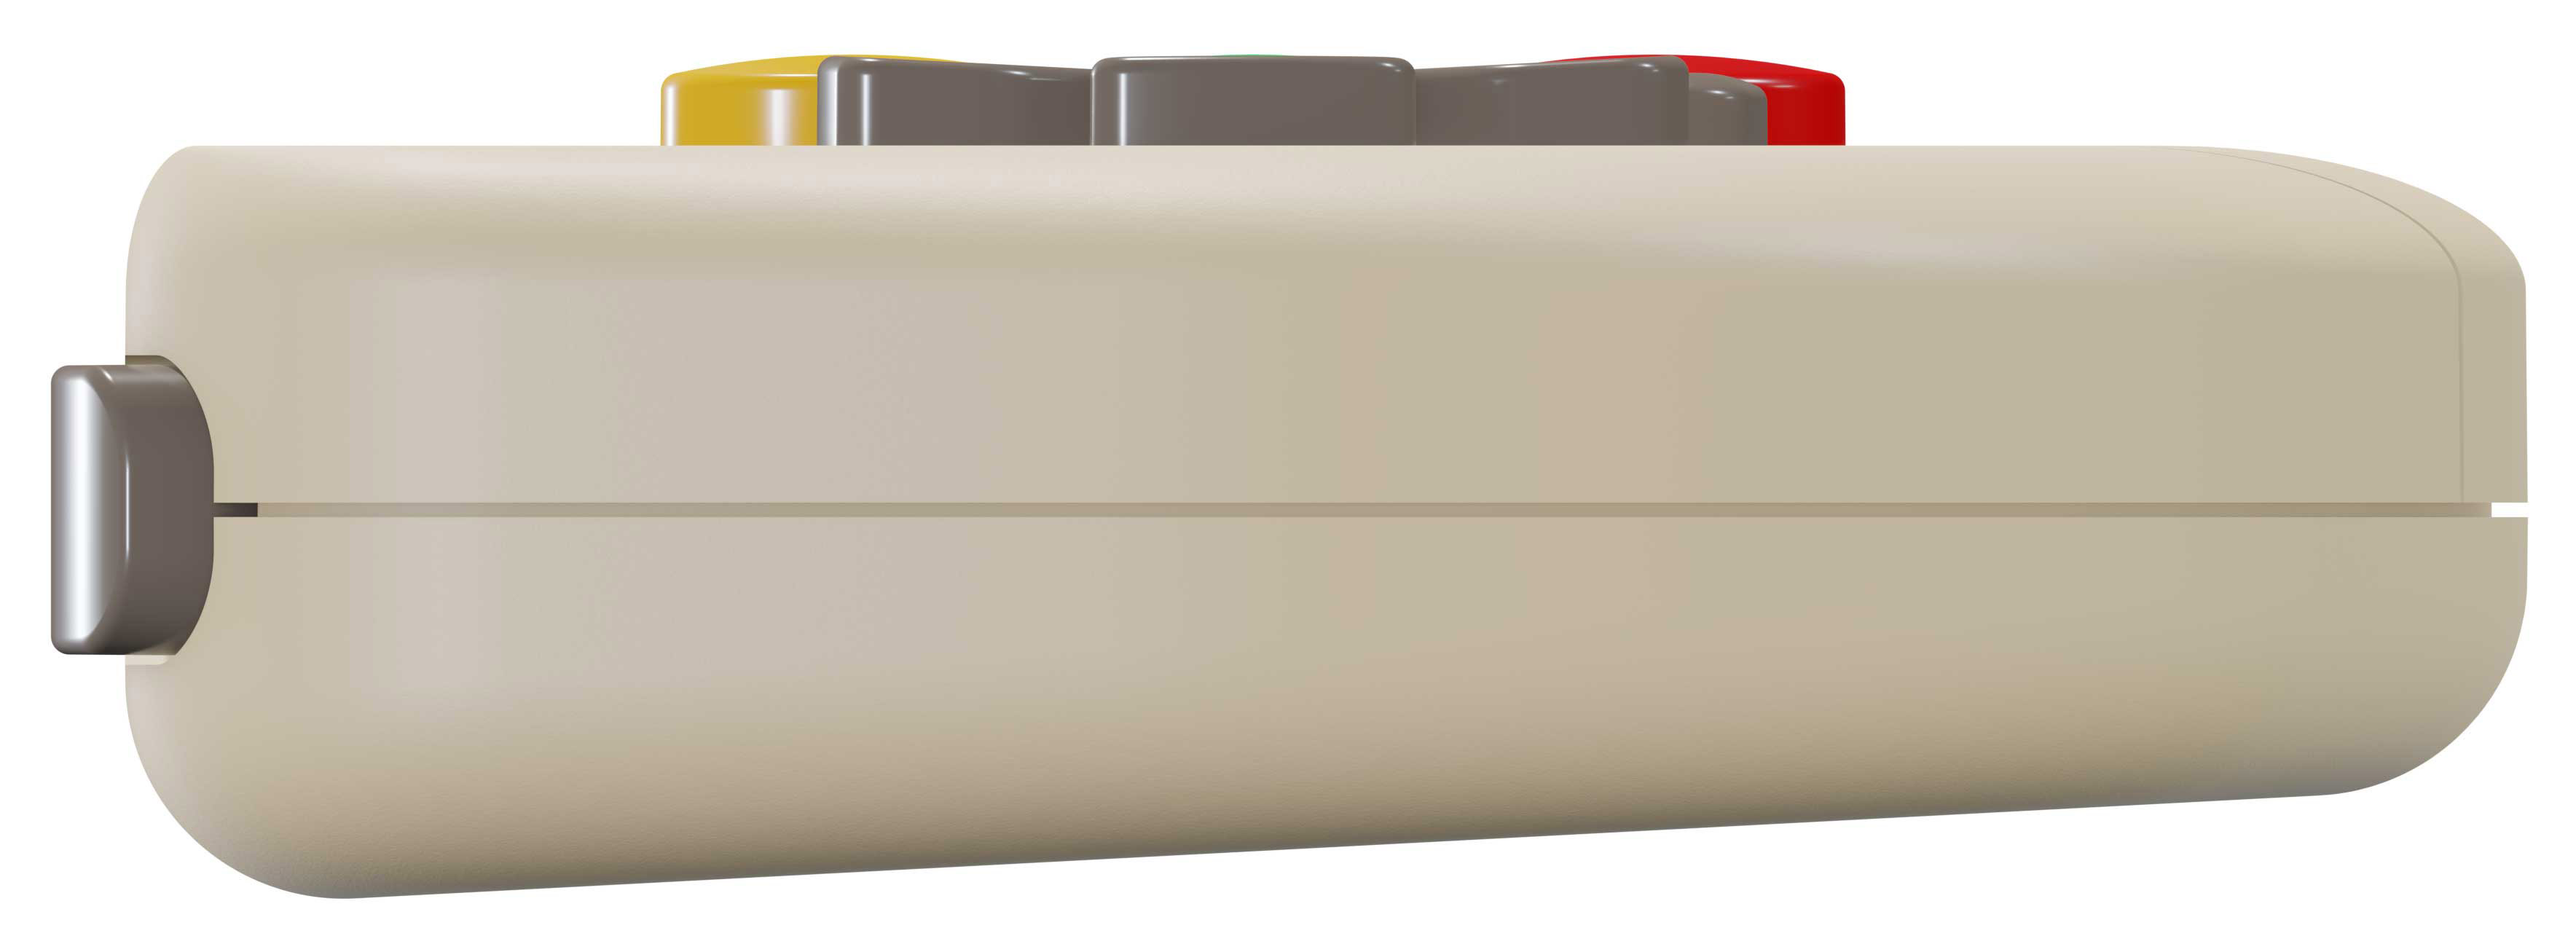 PLAION Joypad MAC, Mini für Cream PC Colour (UE) Controller The A500